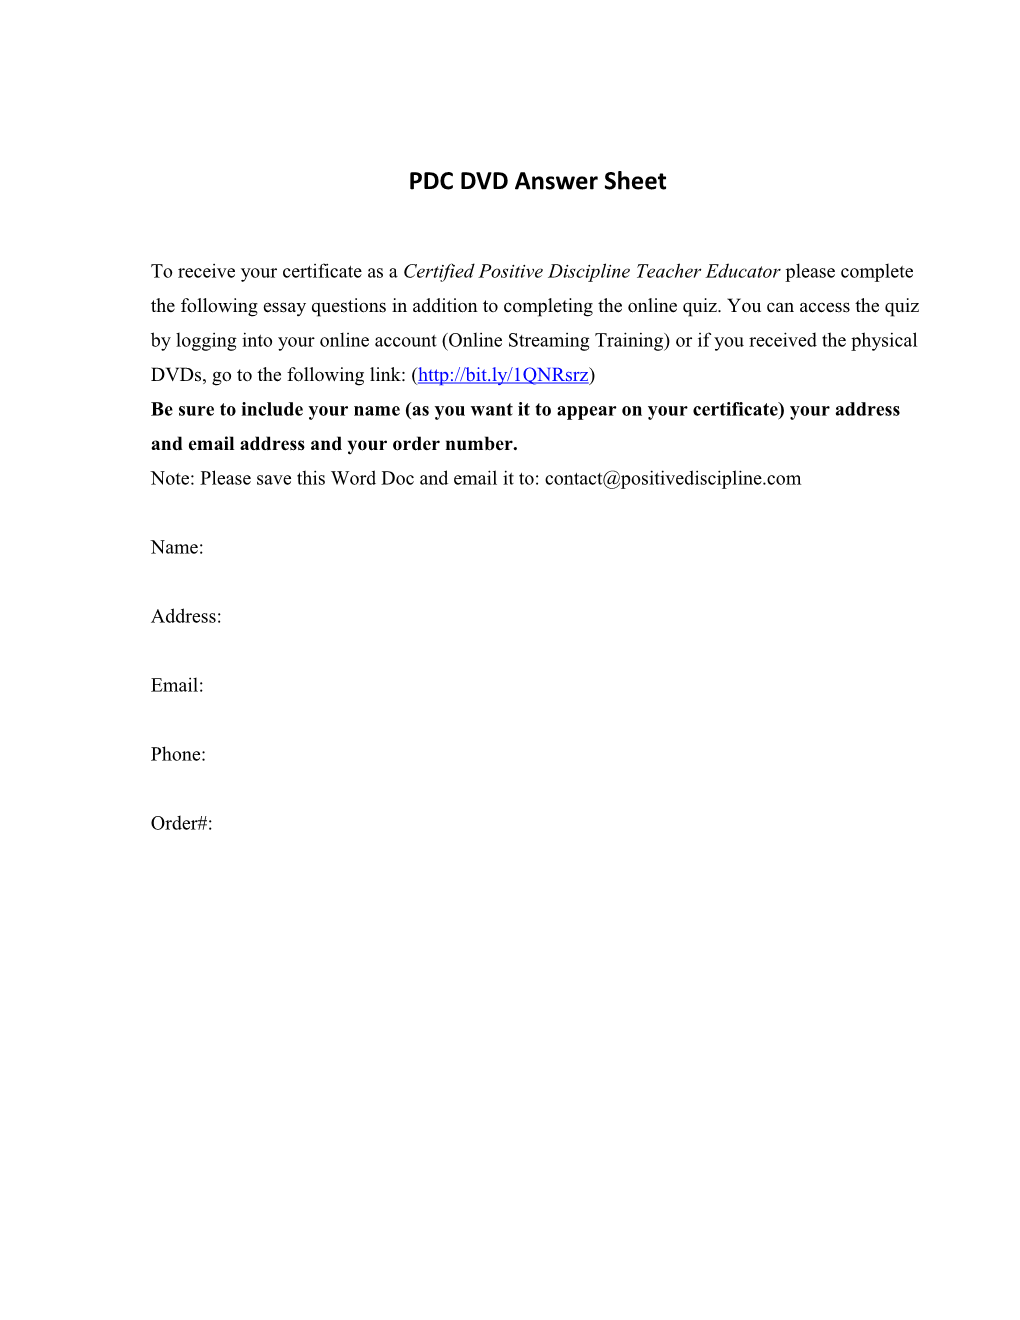 PDC DVD Answer Sheet